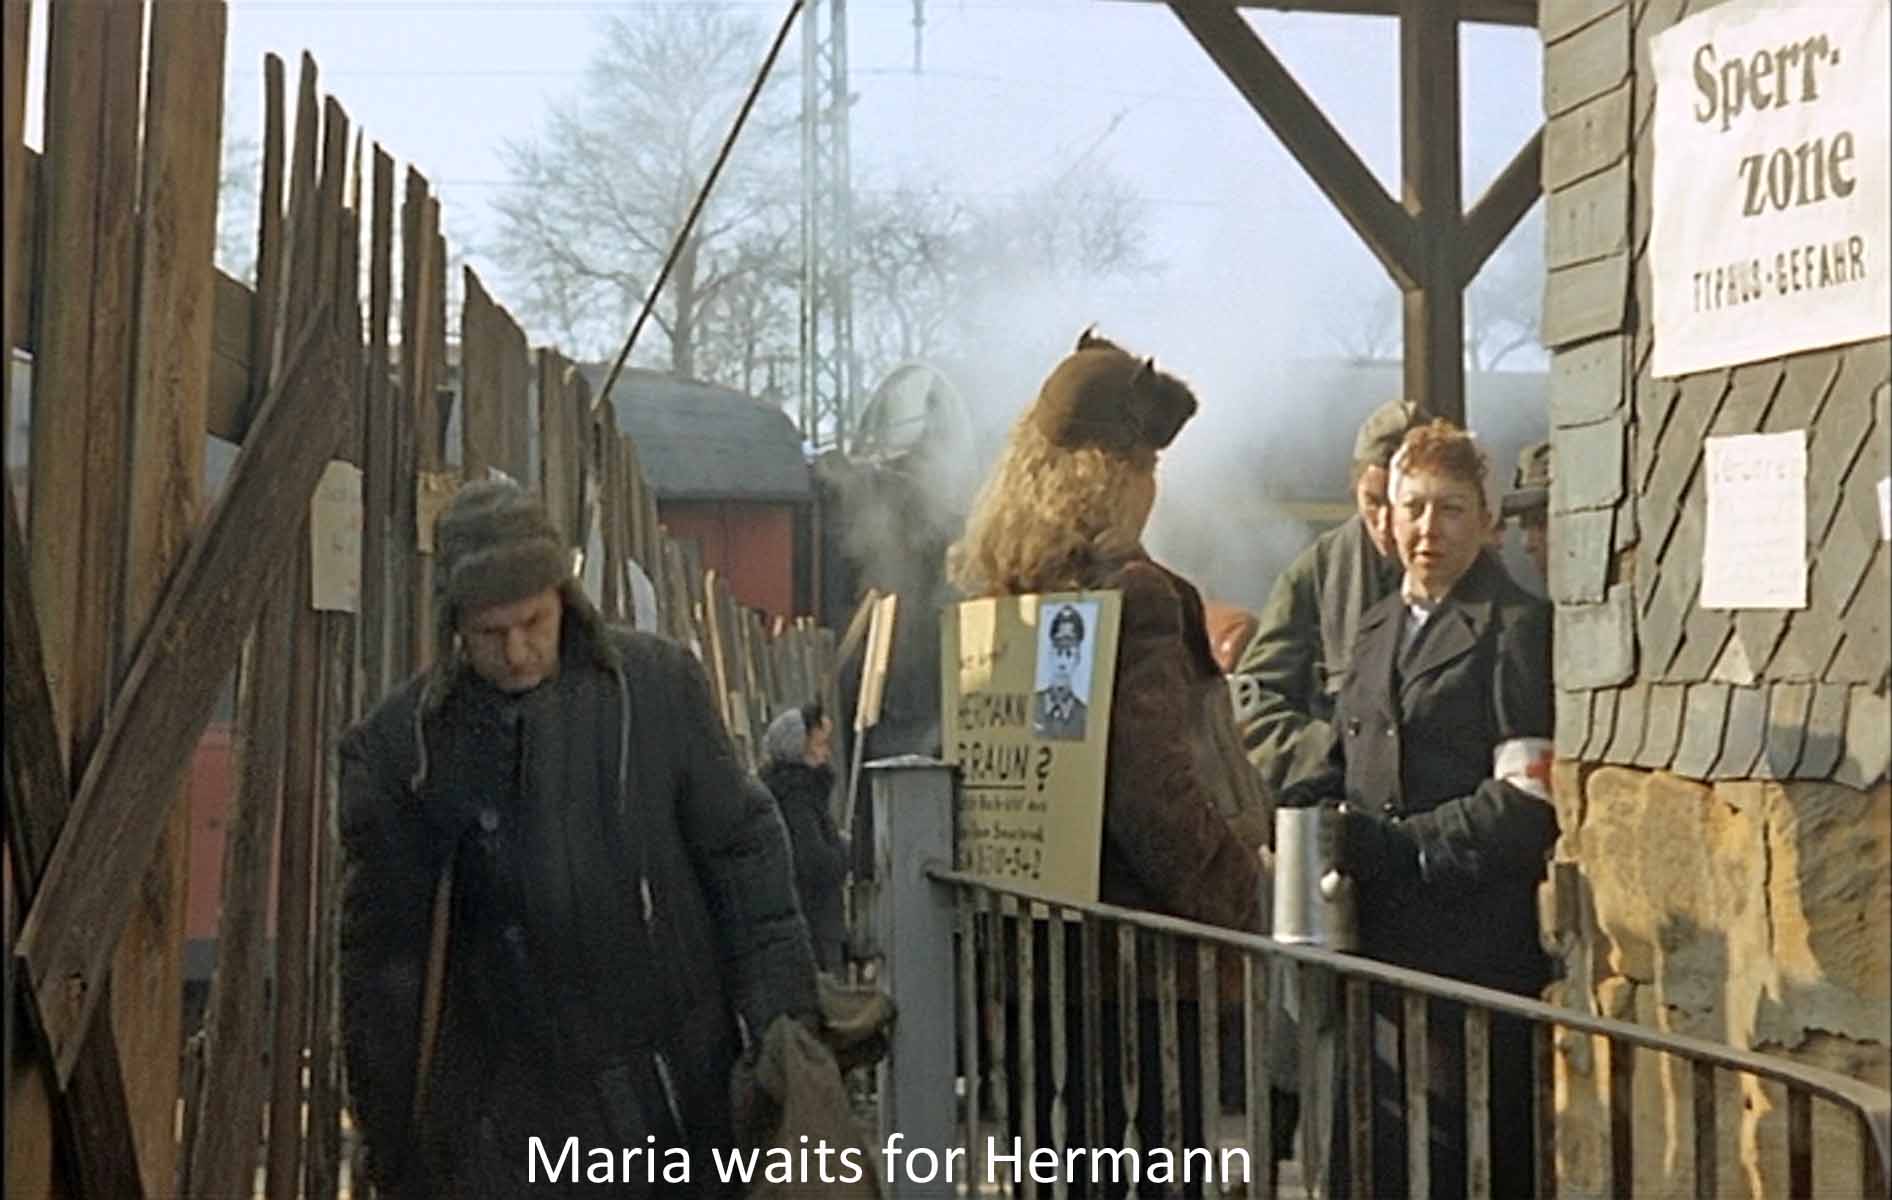 Maria waits for Hermann